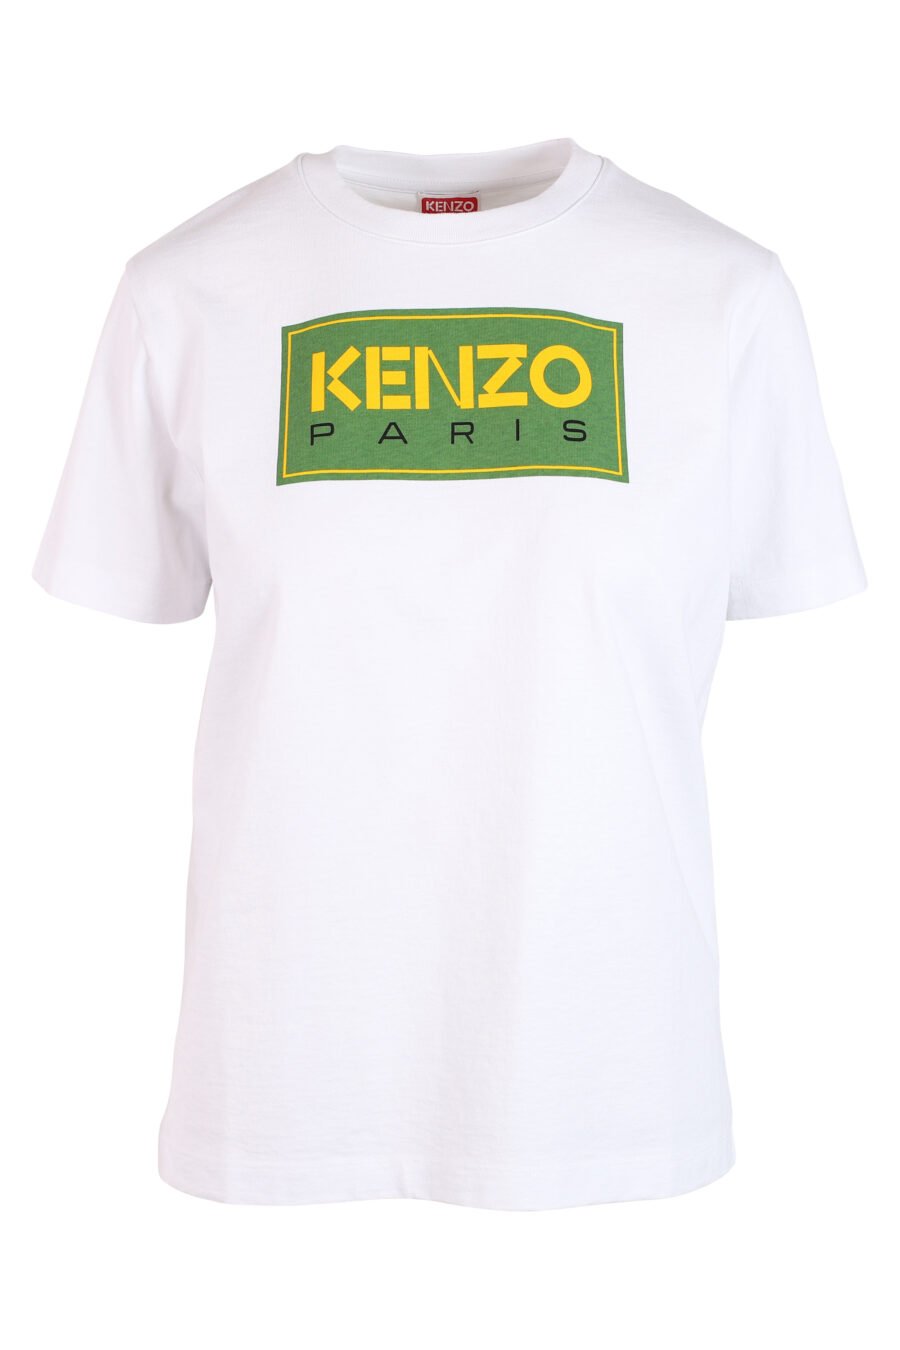 T-shirt blanc avec maxilogo vert "paris" - IMG 3268